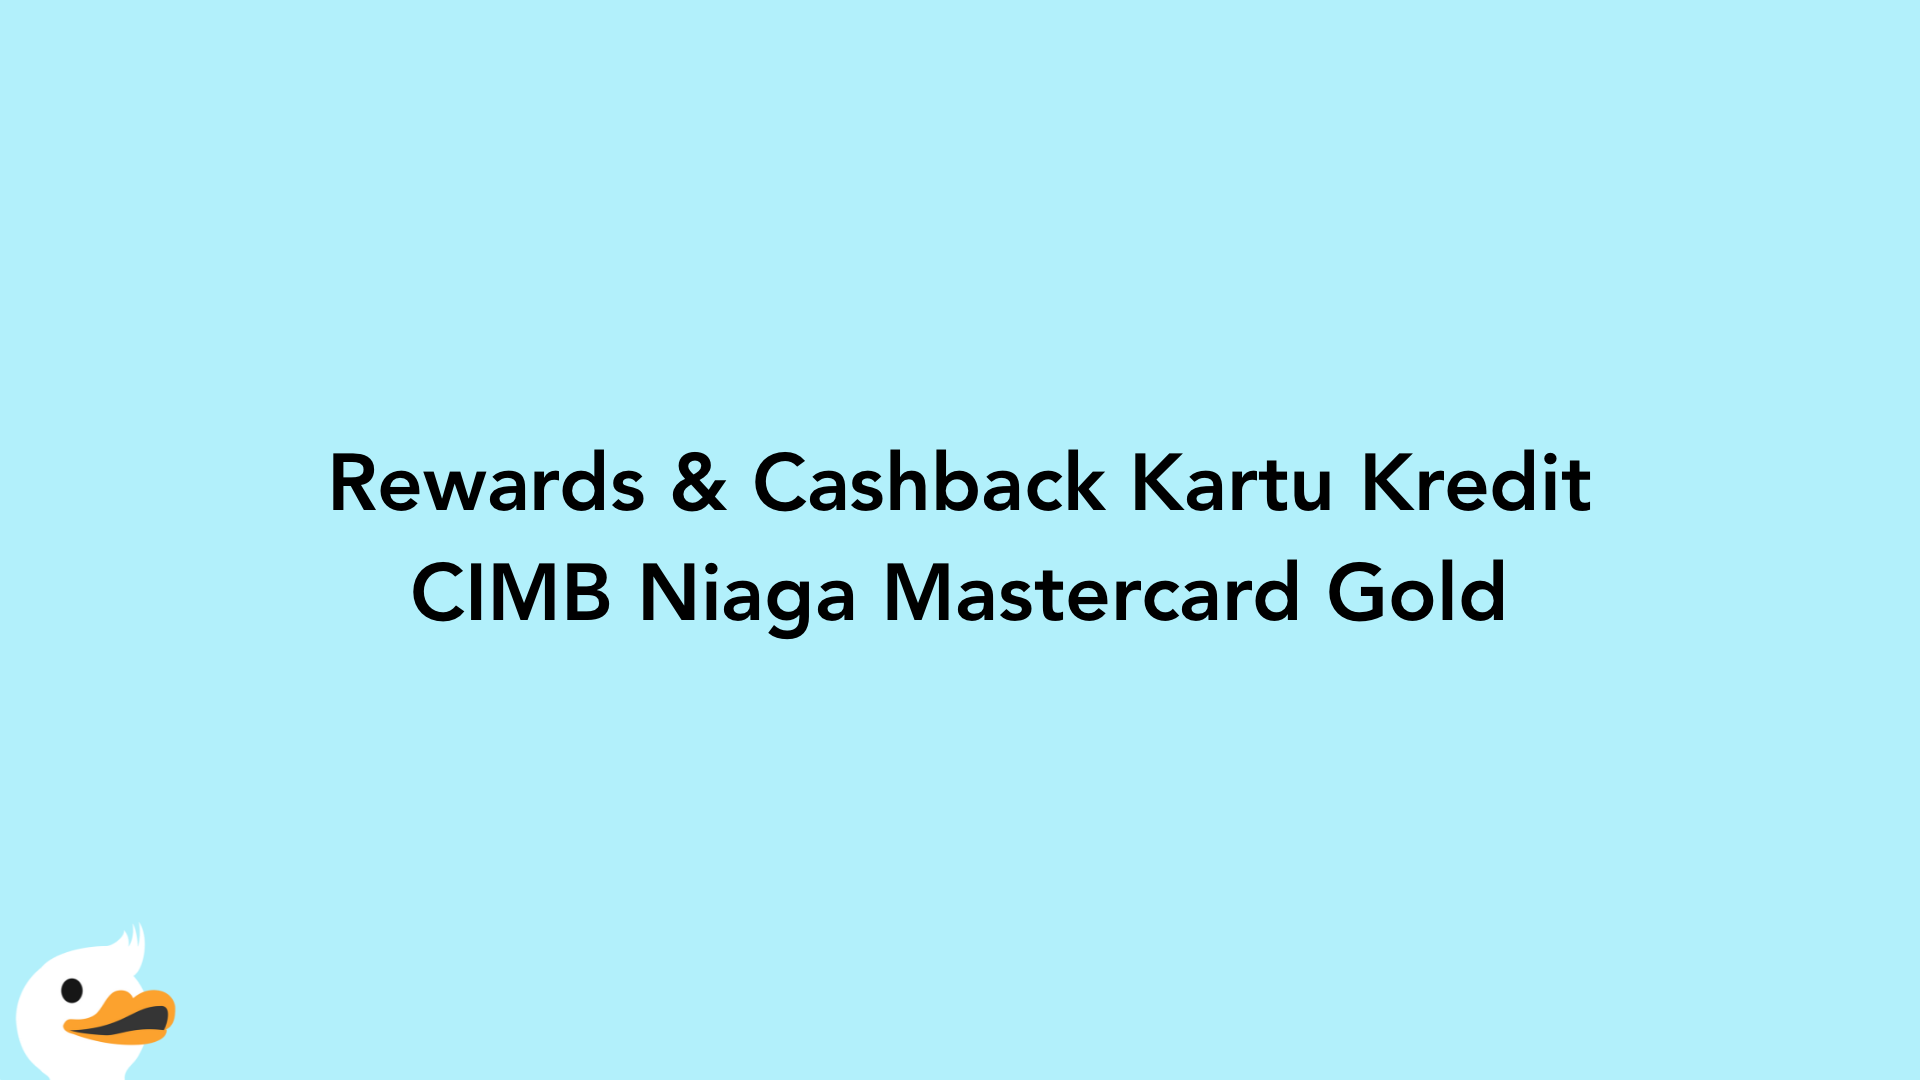 Rewards & Cashback Kartu Kredit CIMB Niaga Mastercard Gold